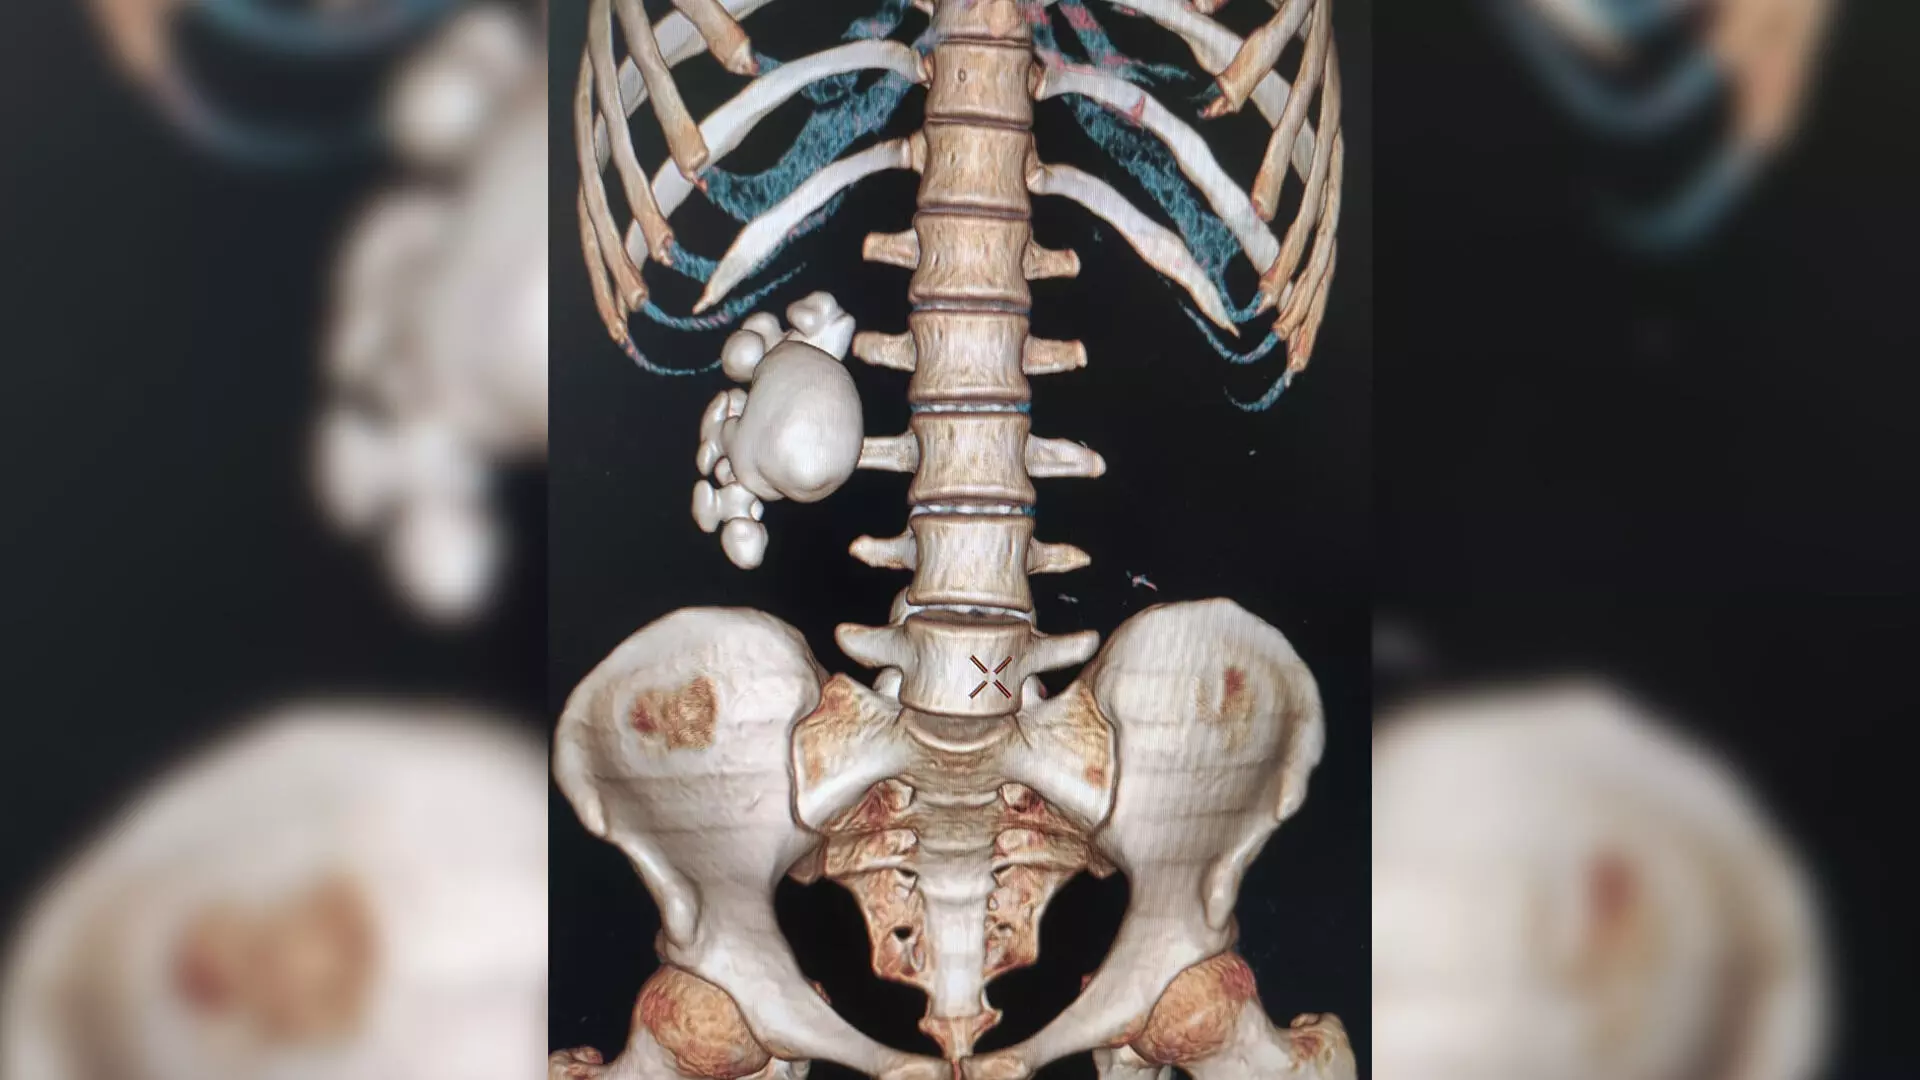 AINU doctors remove Staghorn kidney stones using minimally-invasive procedure from 20YO patient